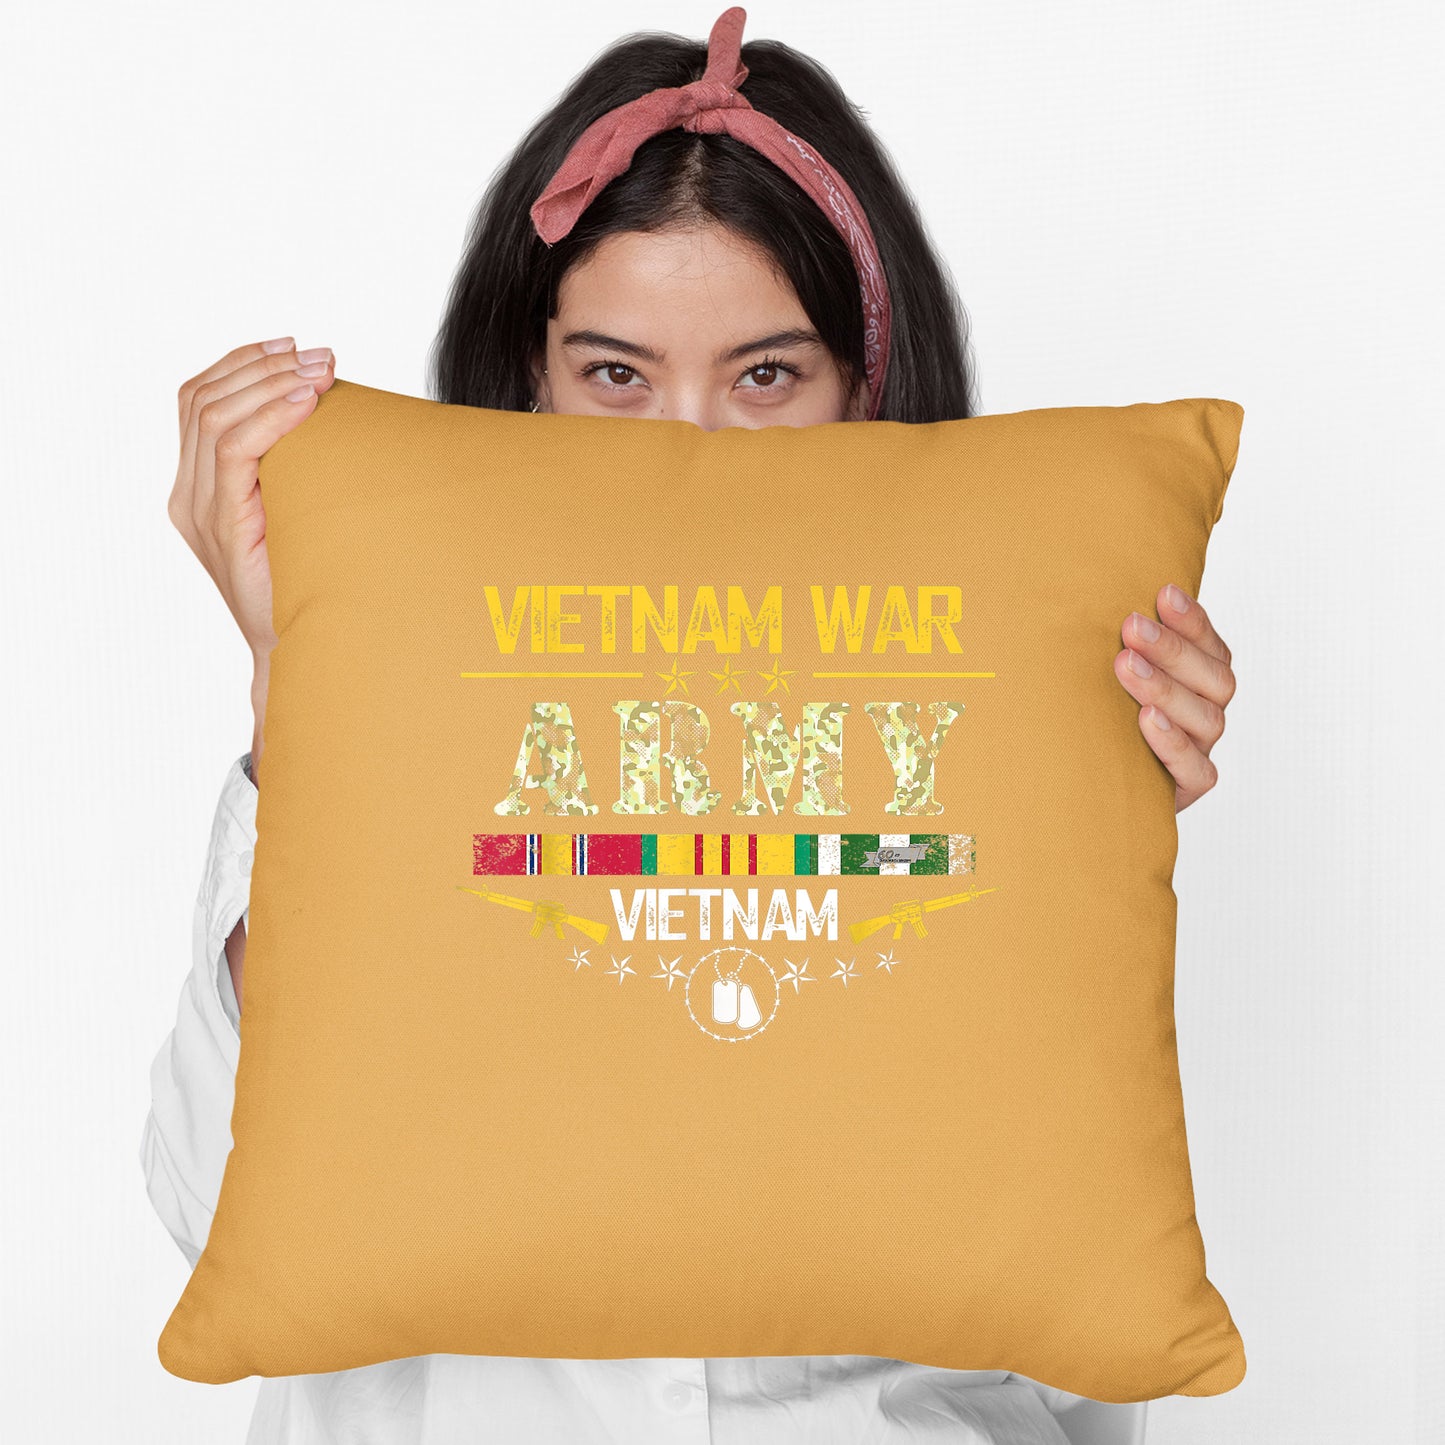 Vietnam Veteran War Army For Those Who Served Cushion, Print Linen Cushion